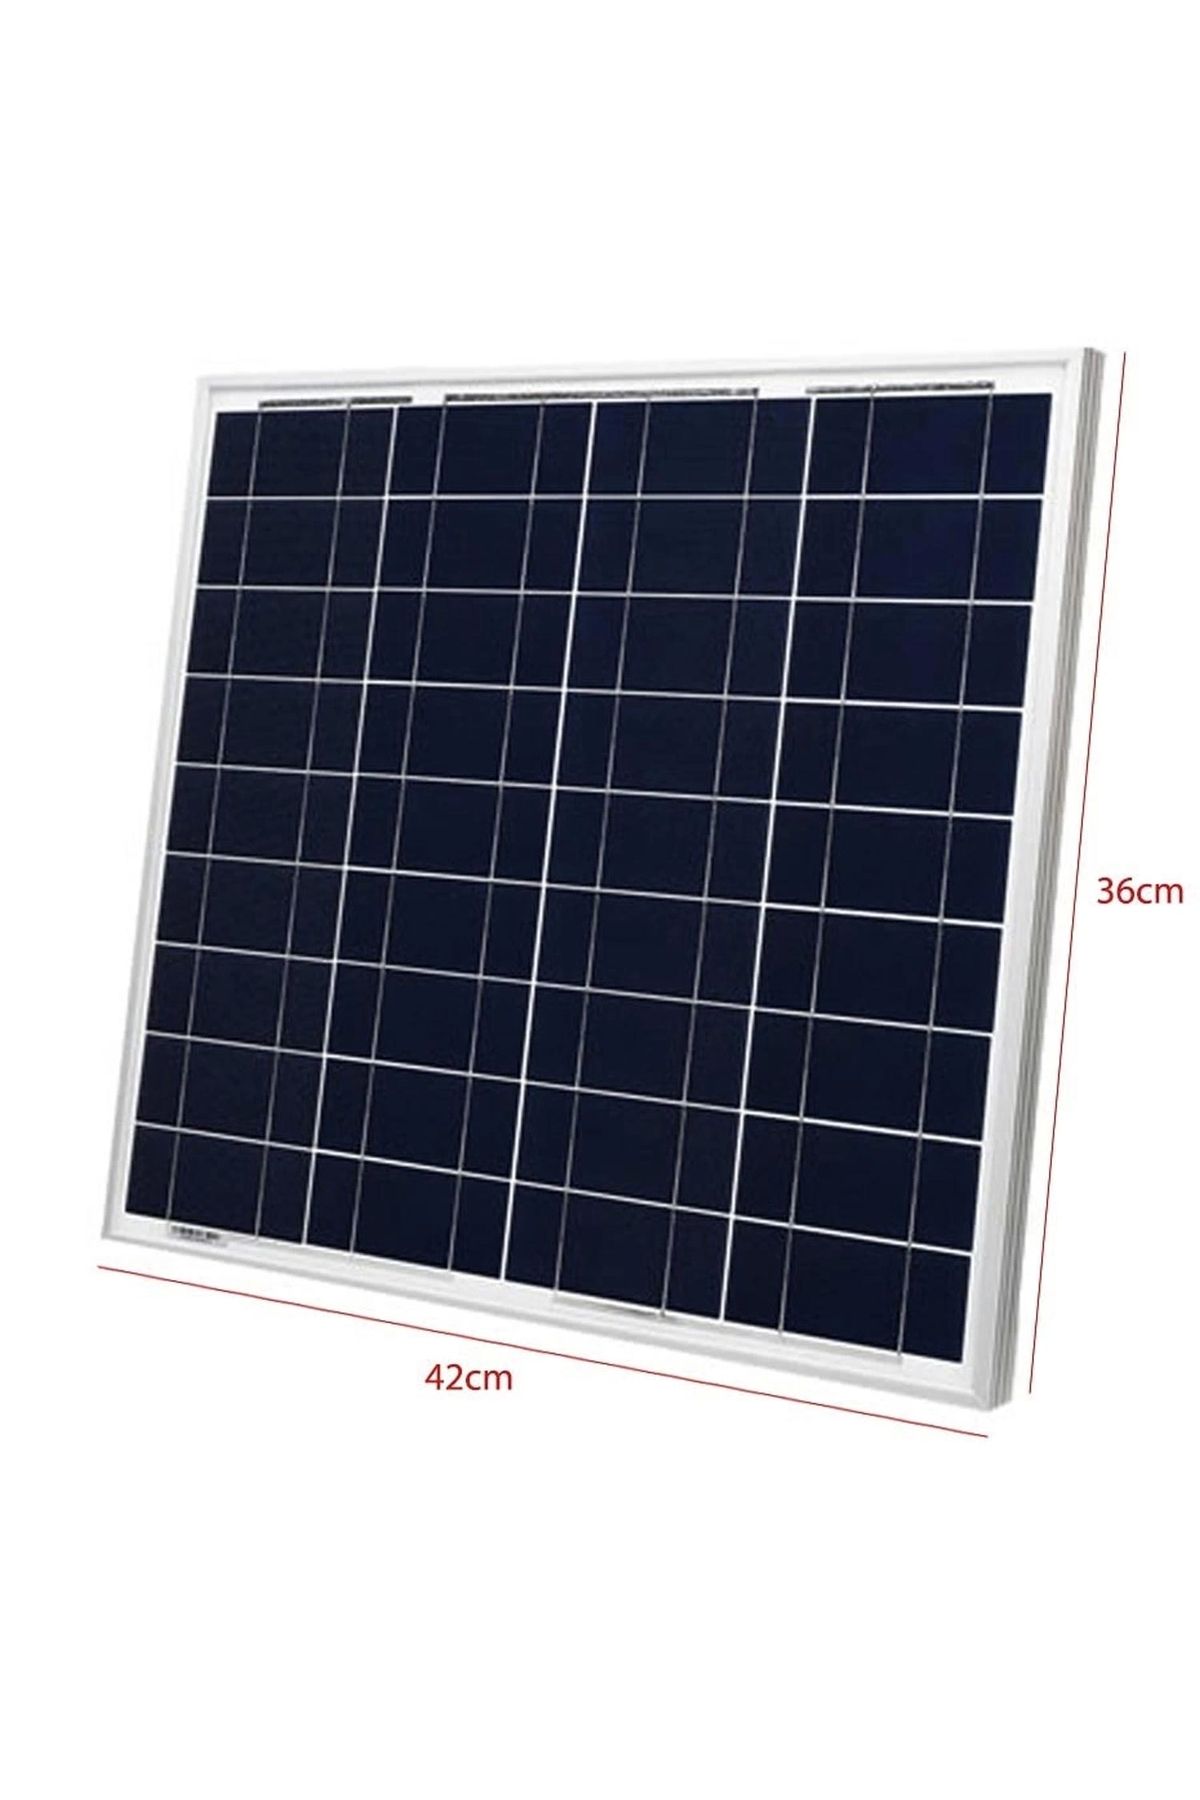 Lexron Solar Panel Güneş Enerji 22w Polikristal (42X36CM) Lxr-022p